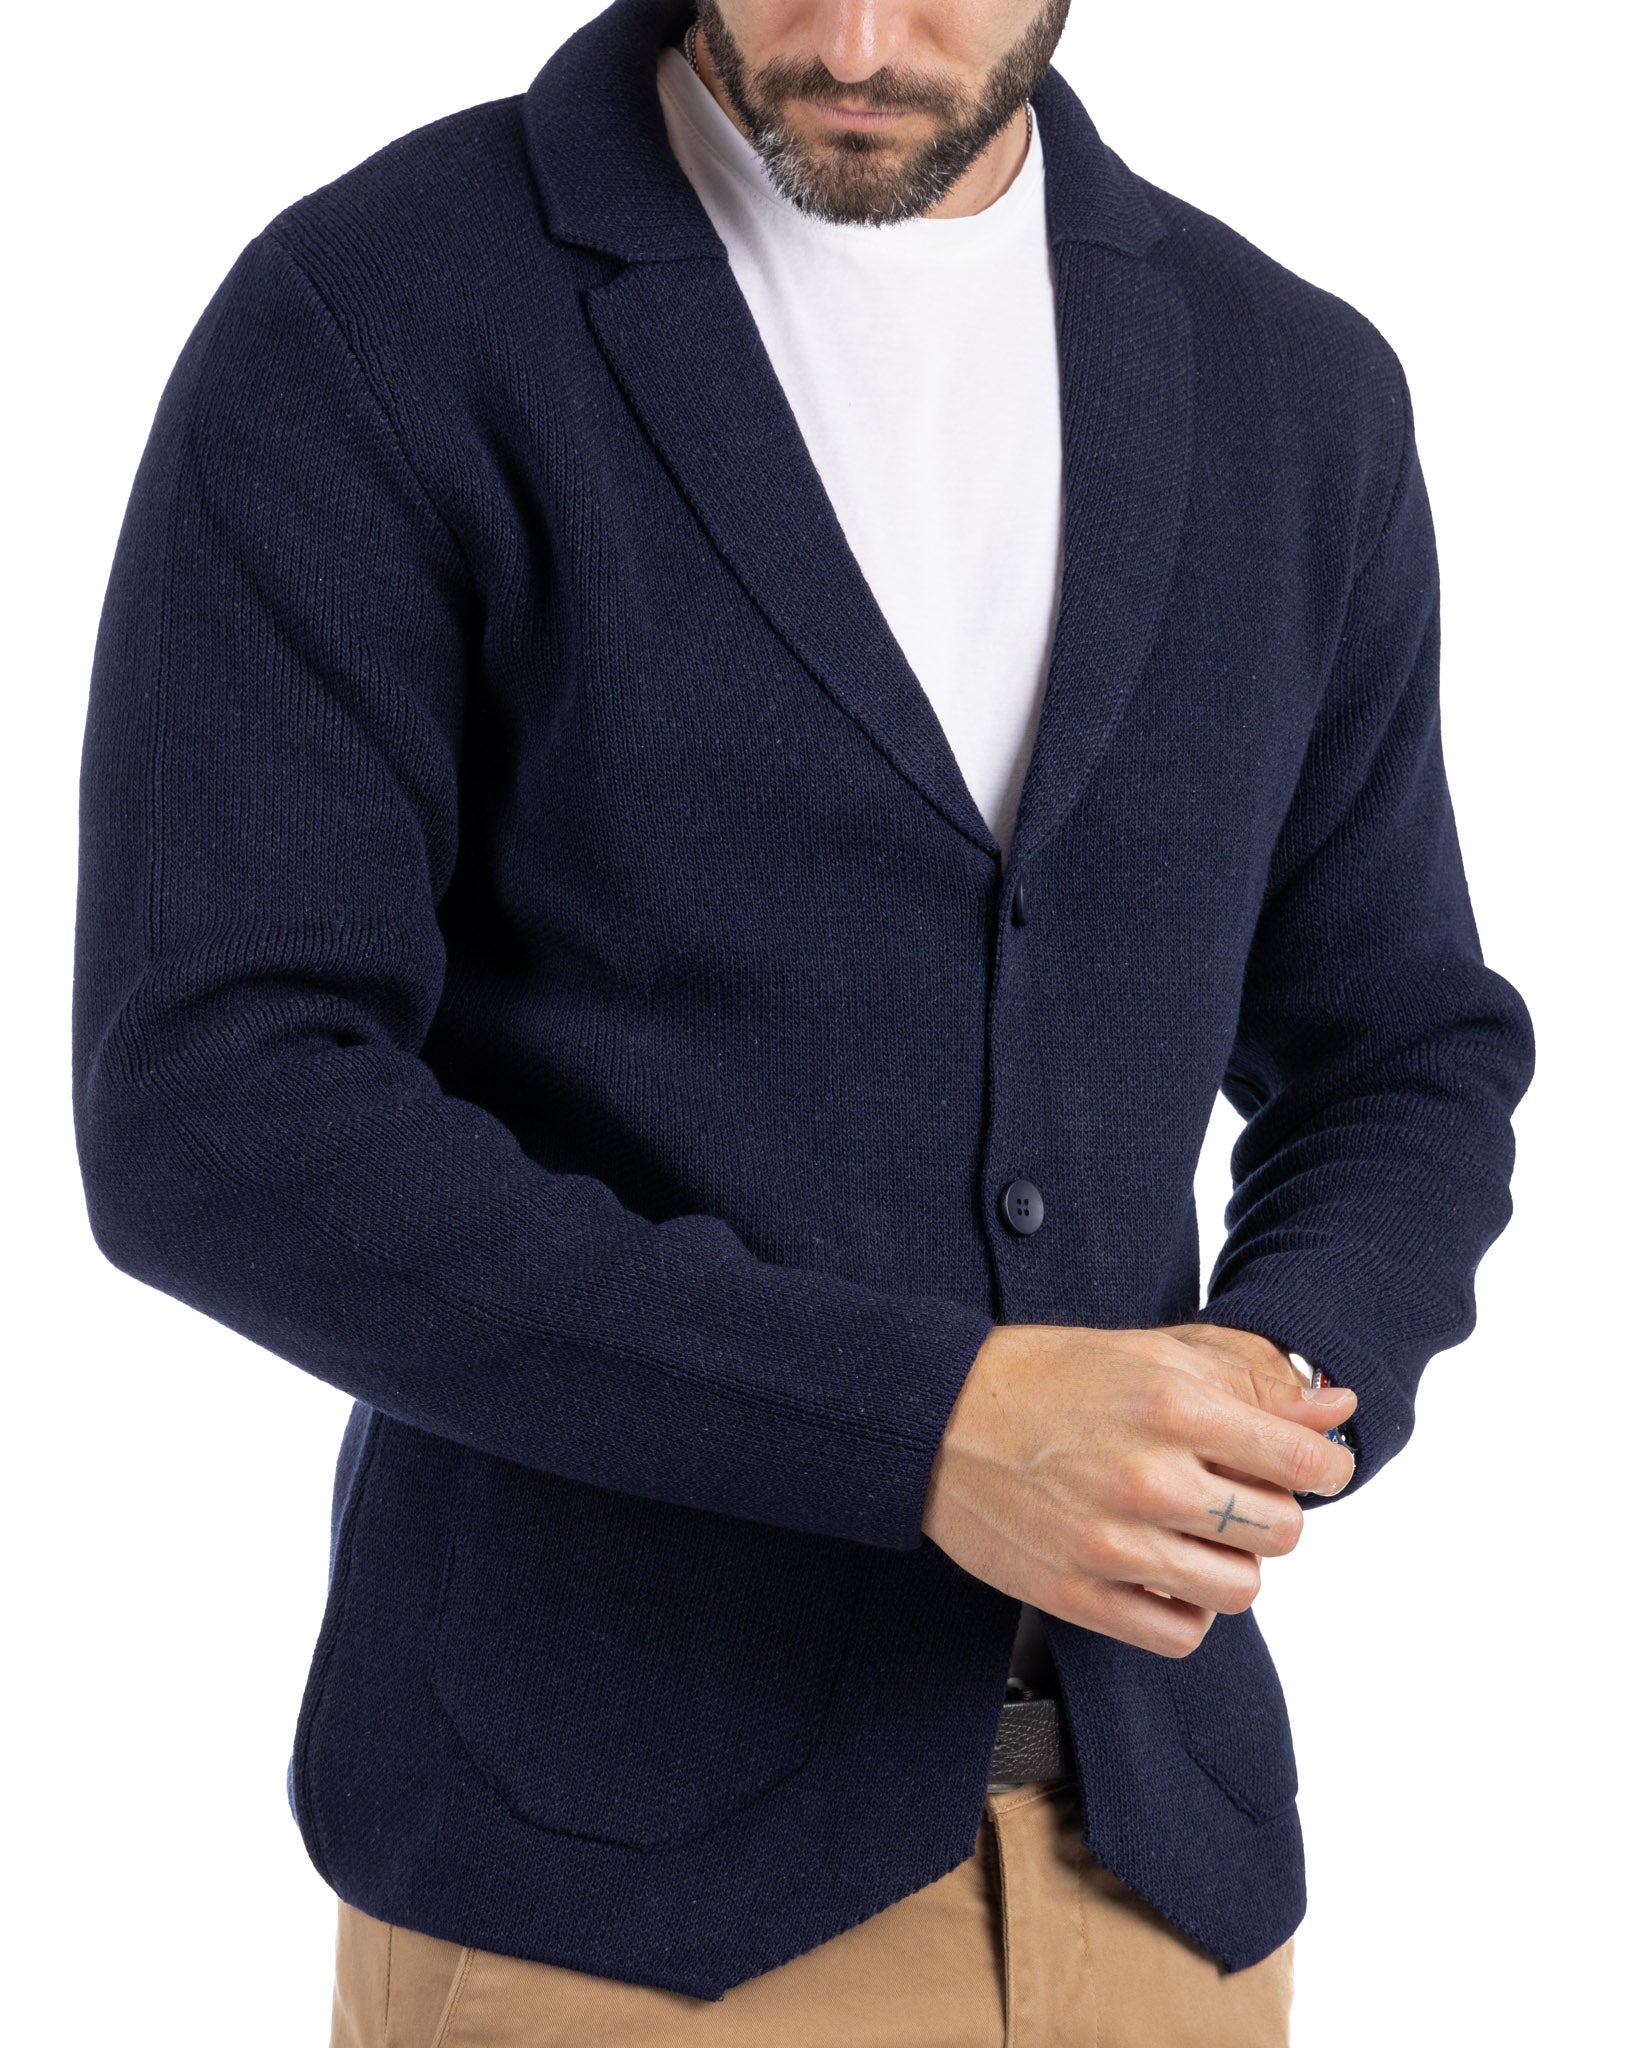 Laurent - cardigan bleu en maille